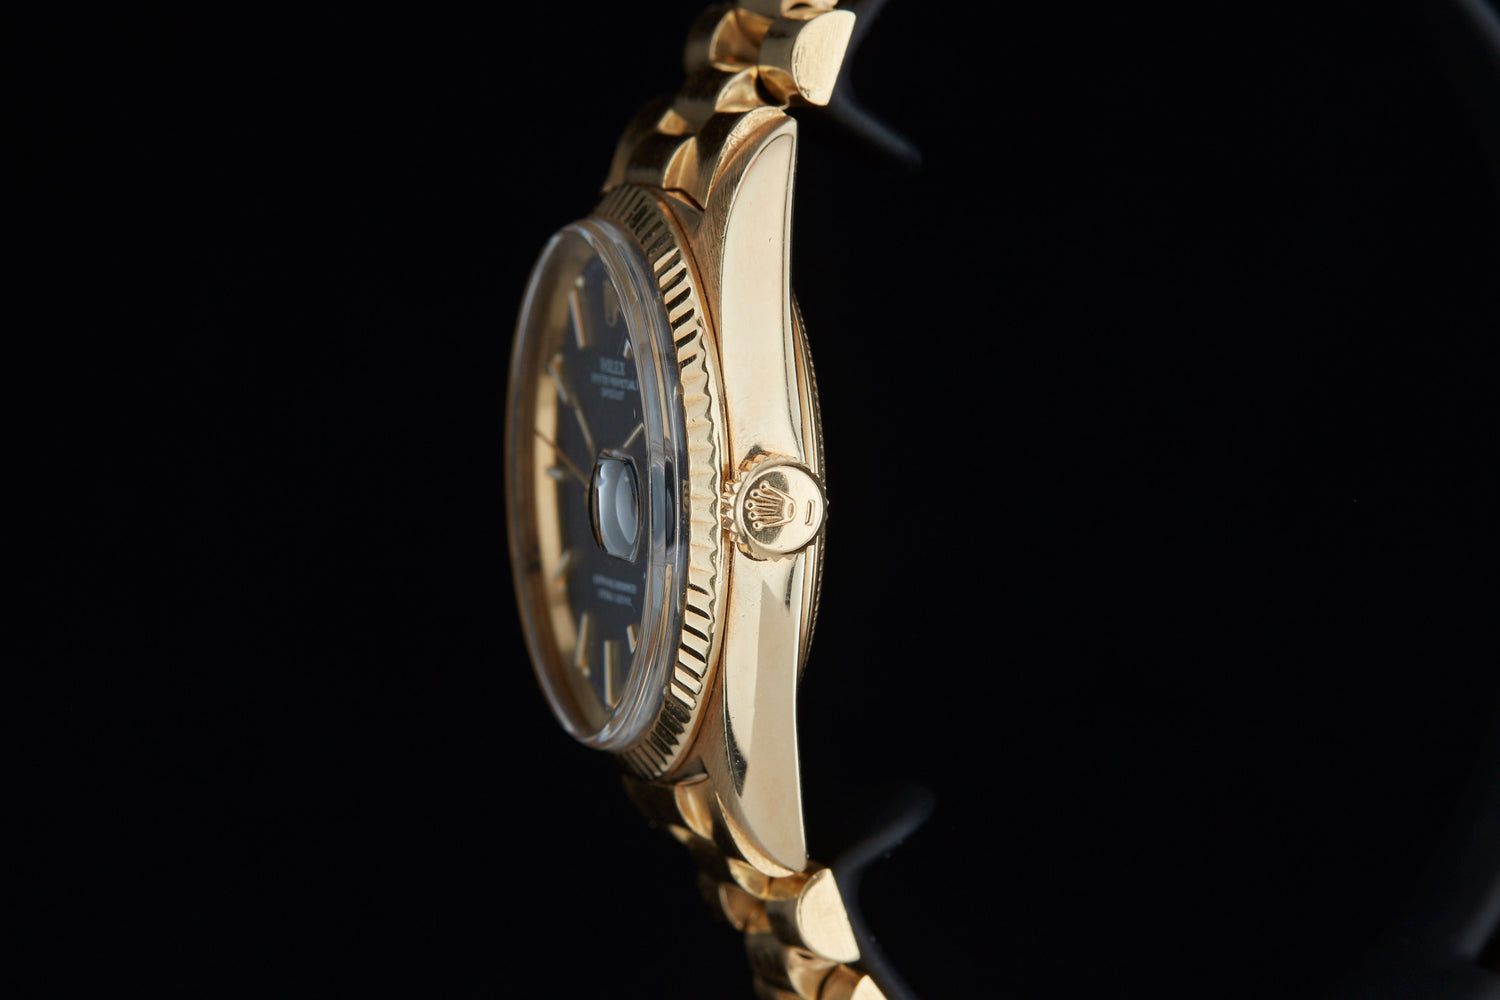 Solid gold vintage Rolex Datejust on black background sideview